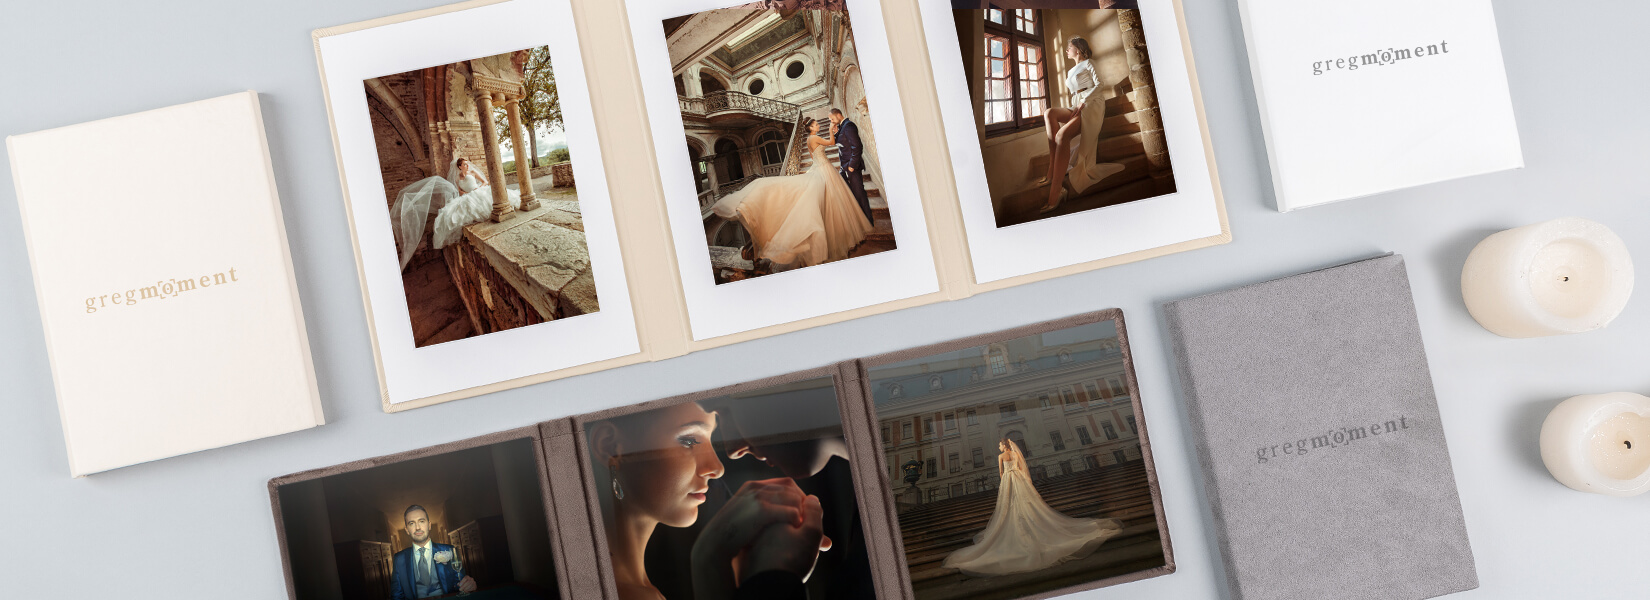 Triplex nphoto professional photo products wedding photography